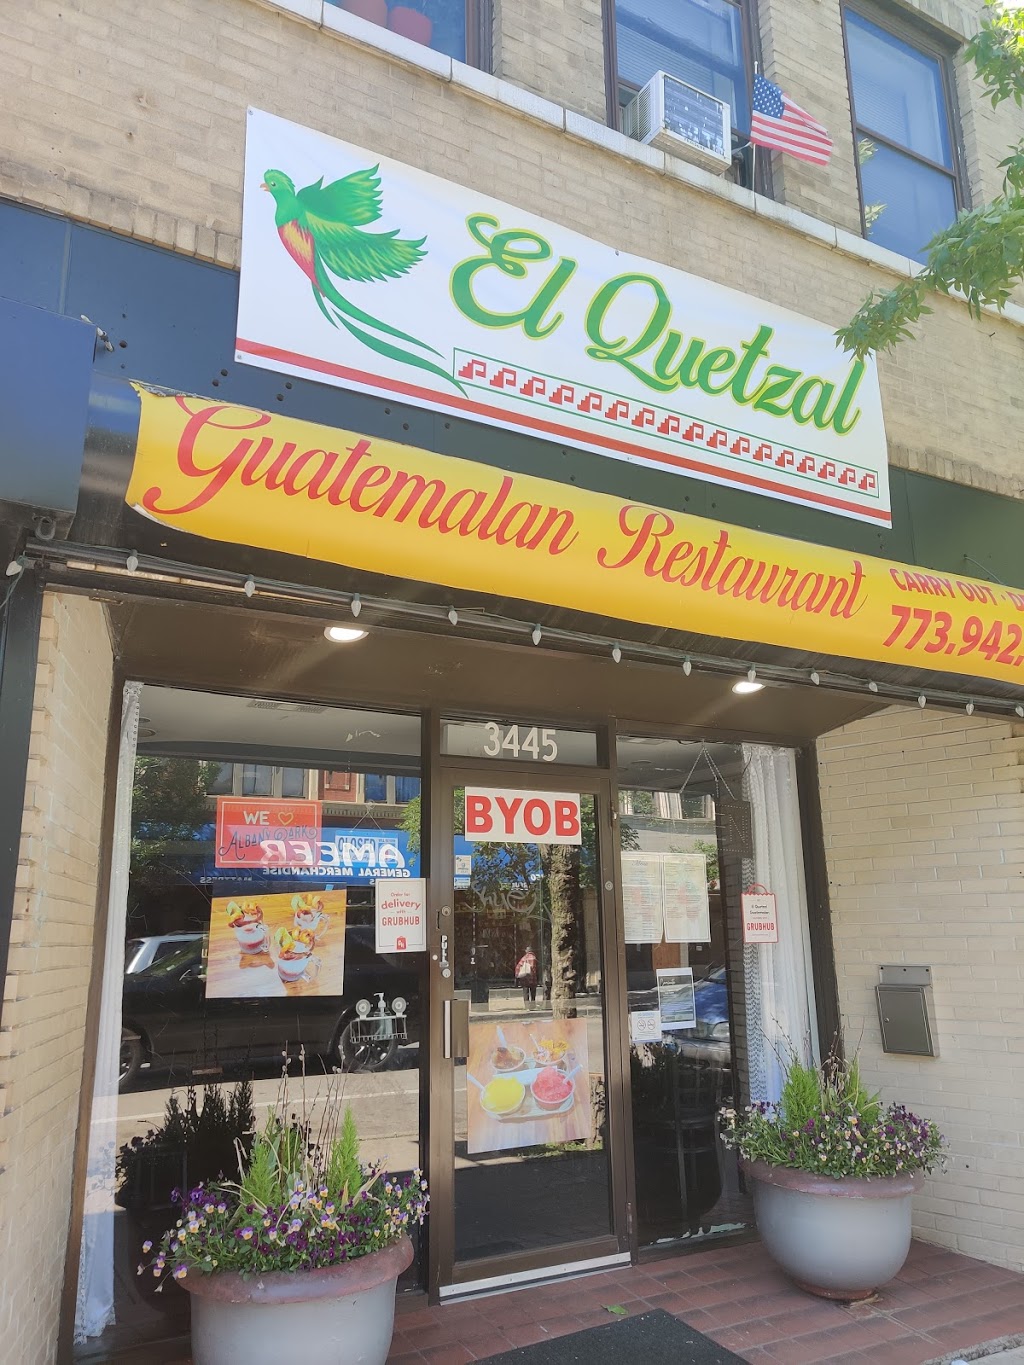 El Quetzal Guatemalan Restaurant 3445 W Lawrence Ave Chicago Il 60625 Usa 